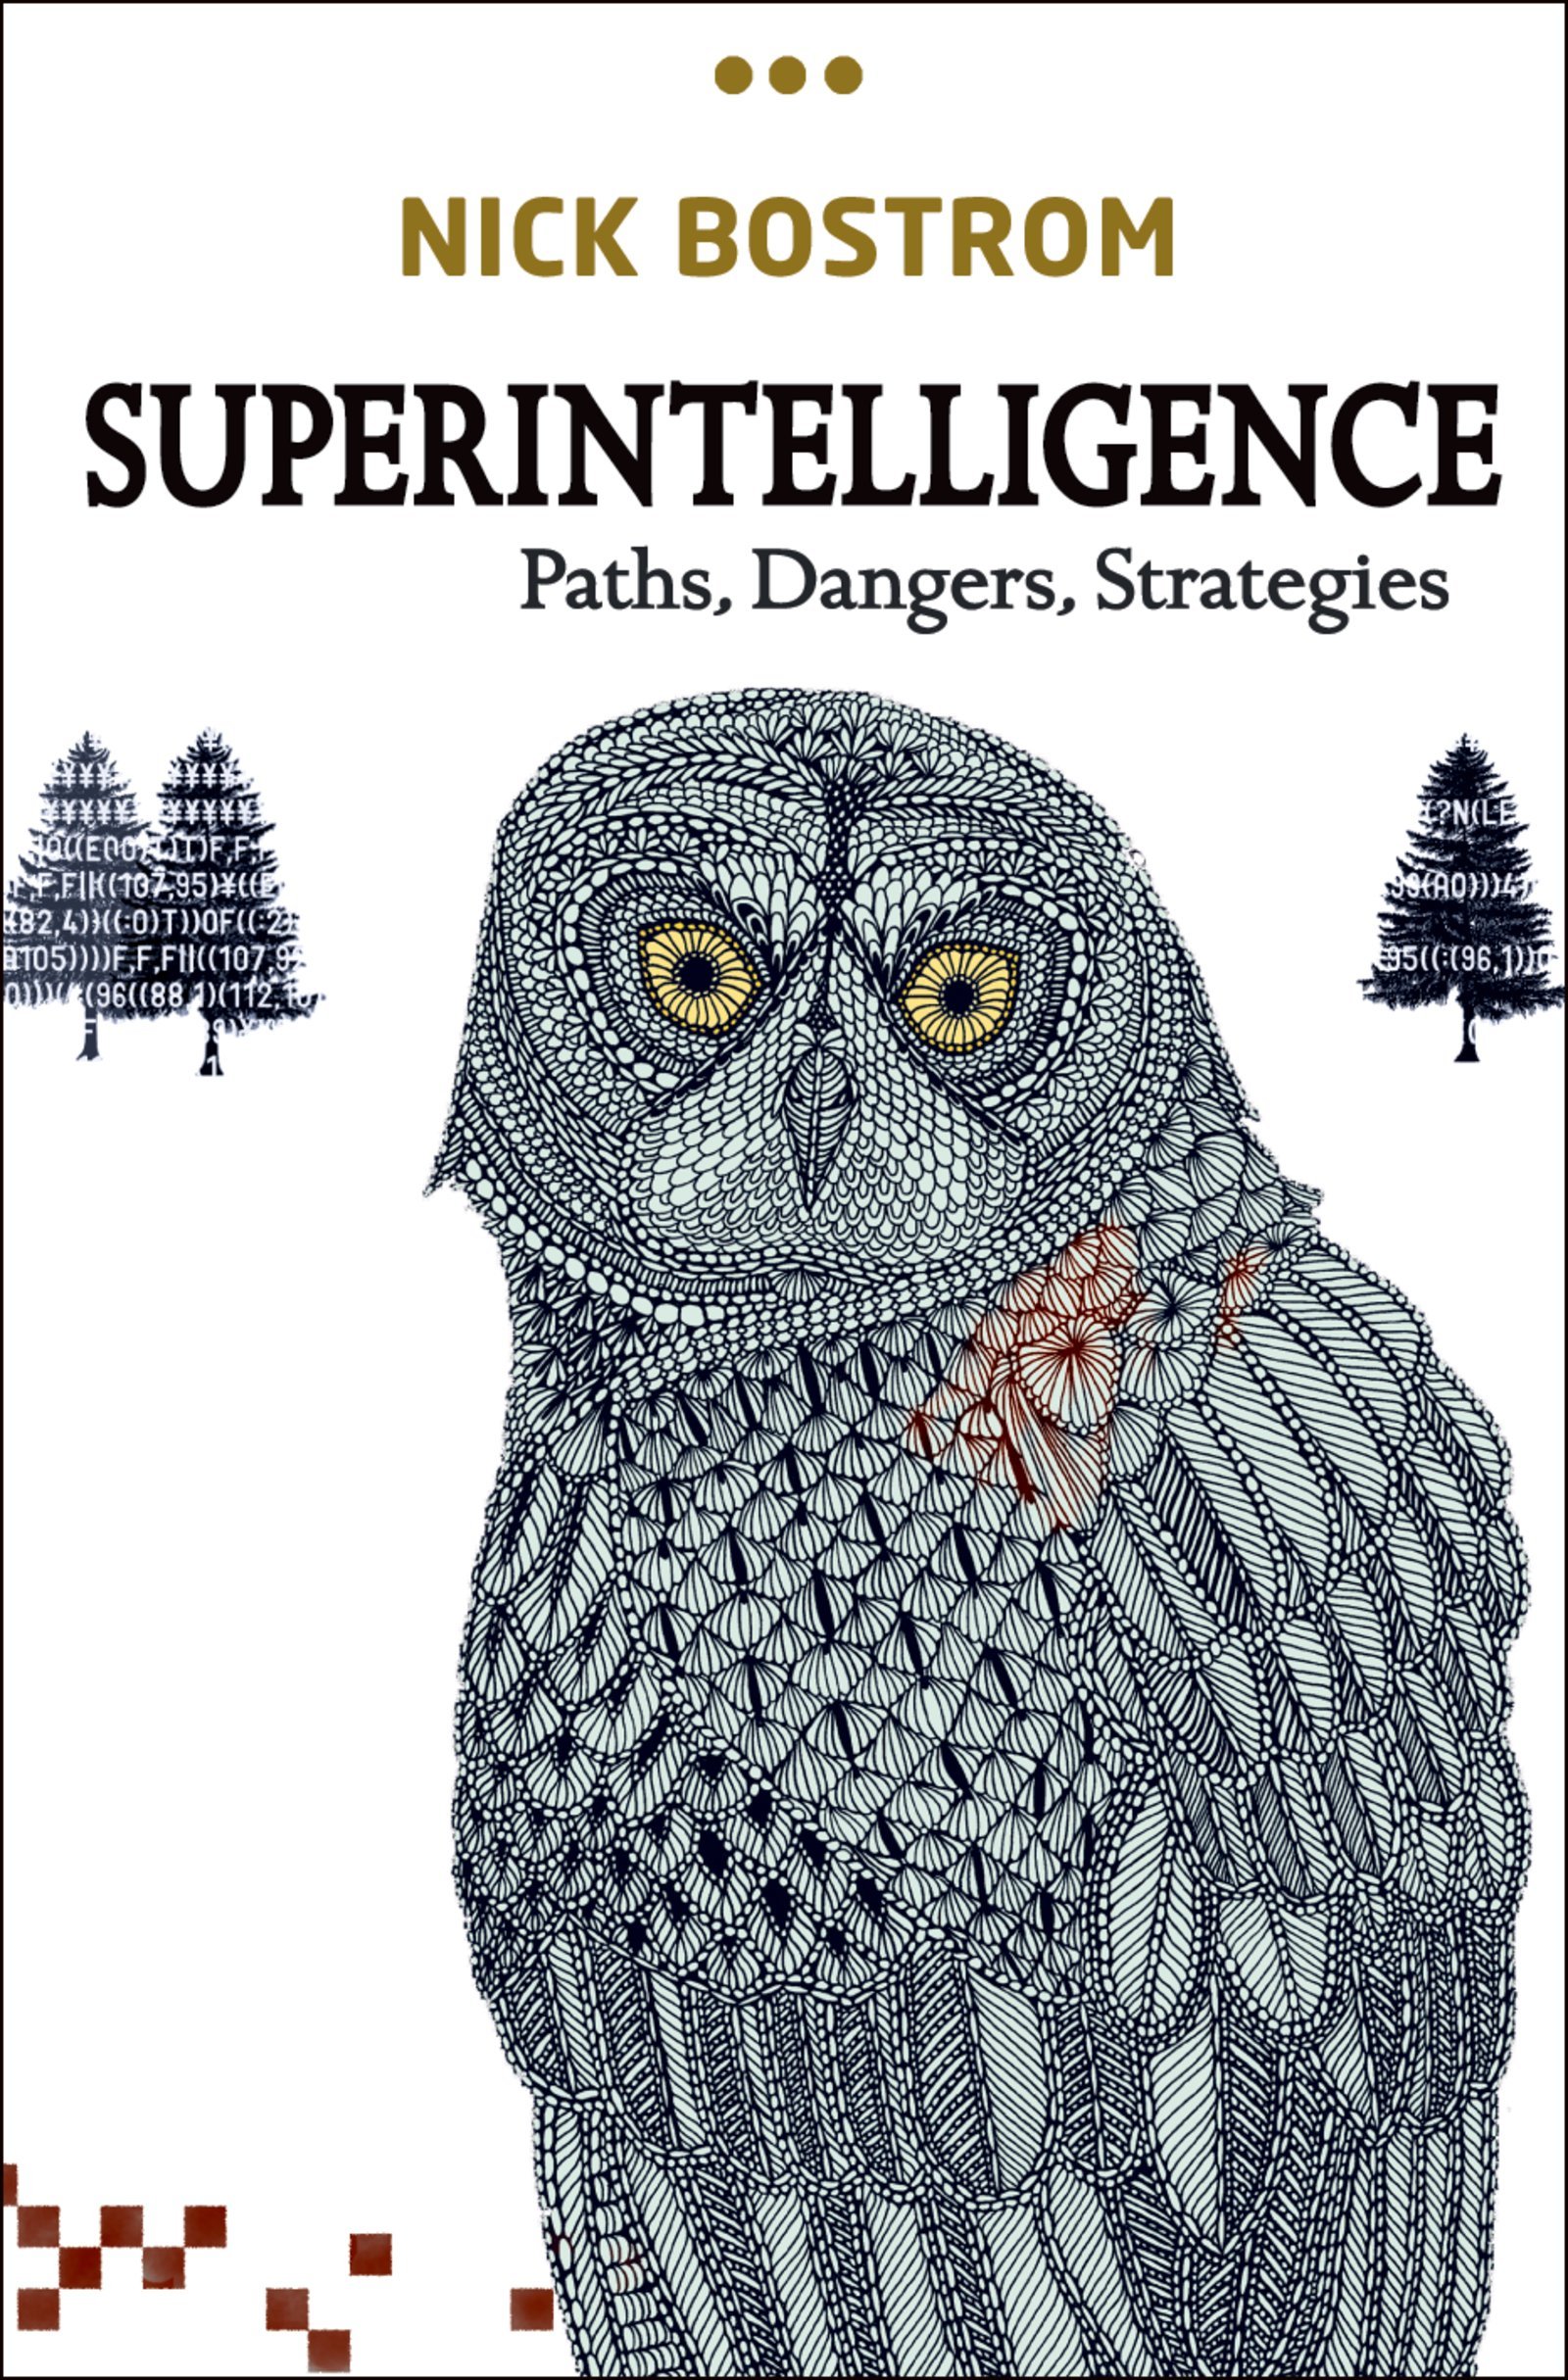 Bostrom's Superintelligence